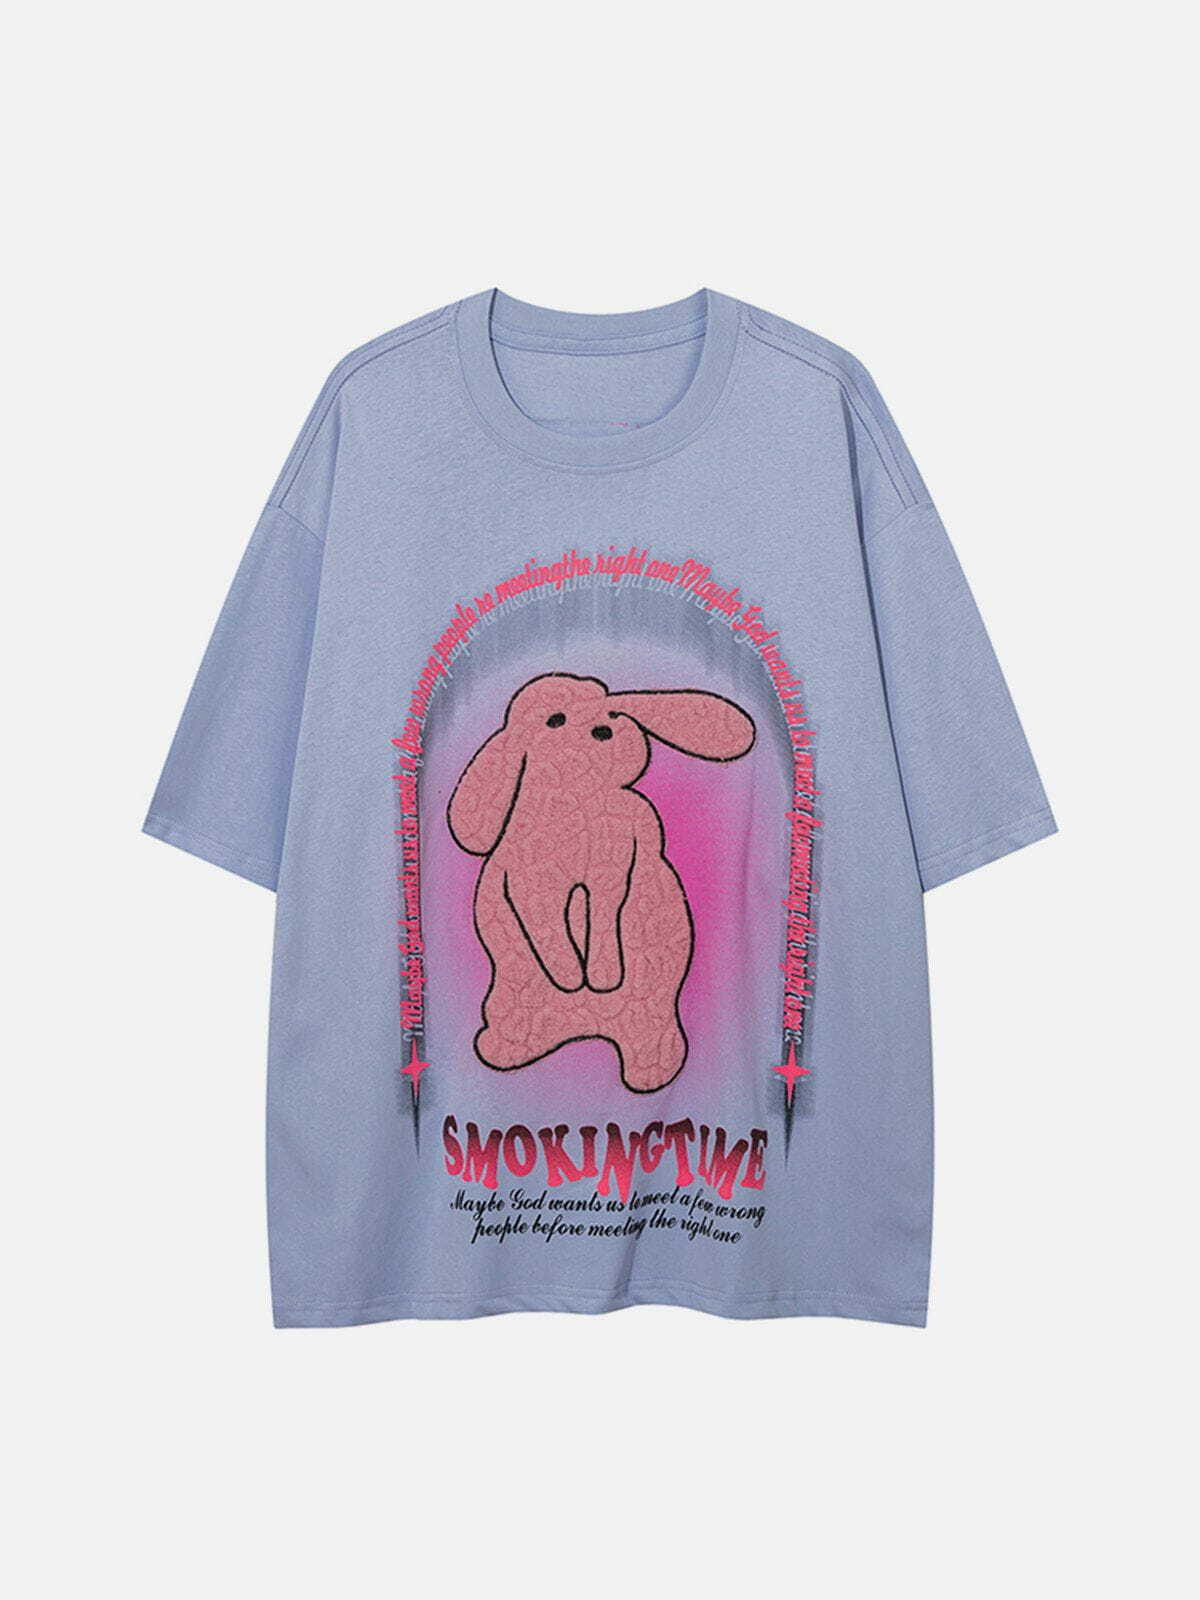 retro rabbit print tee edgy  vibrant streetwear fashion 6817